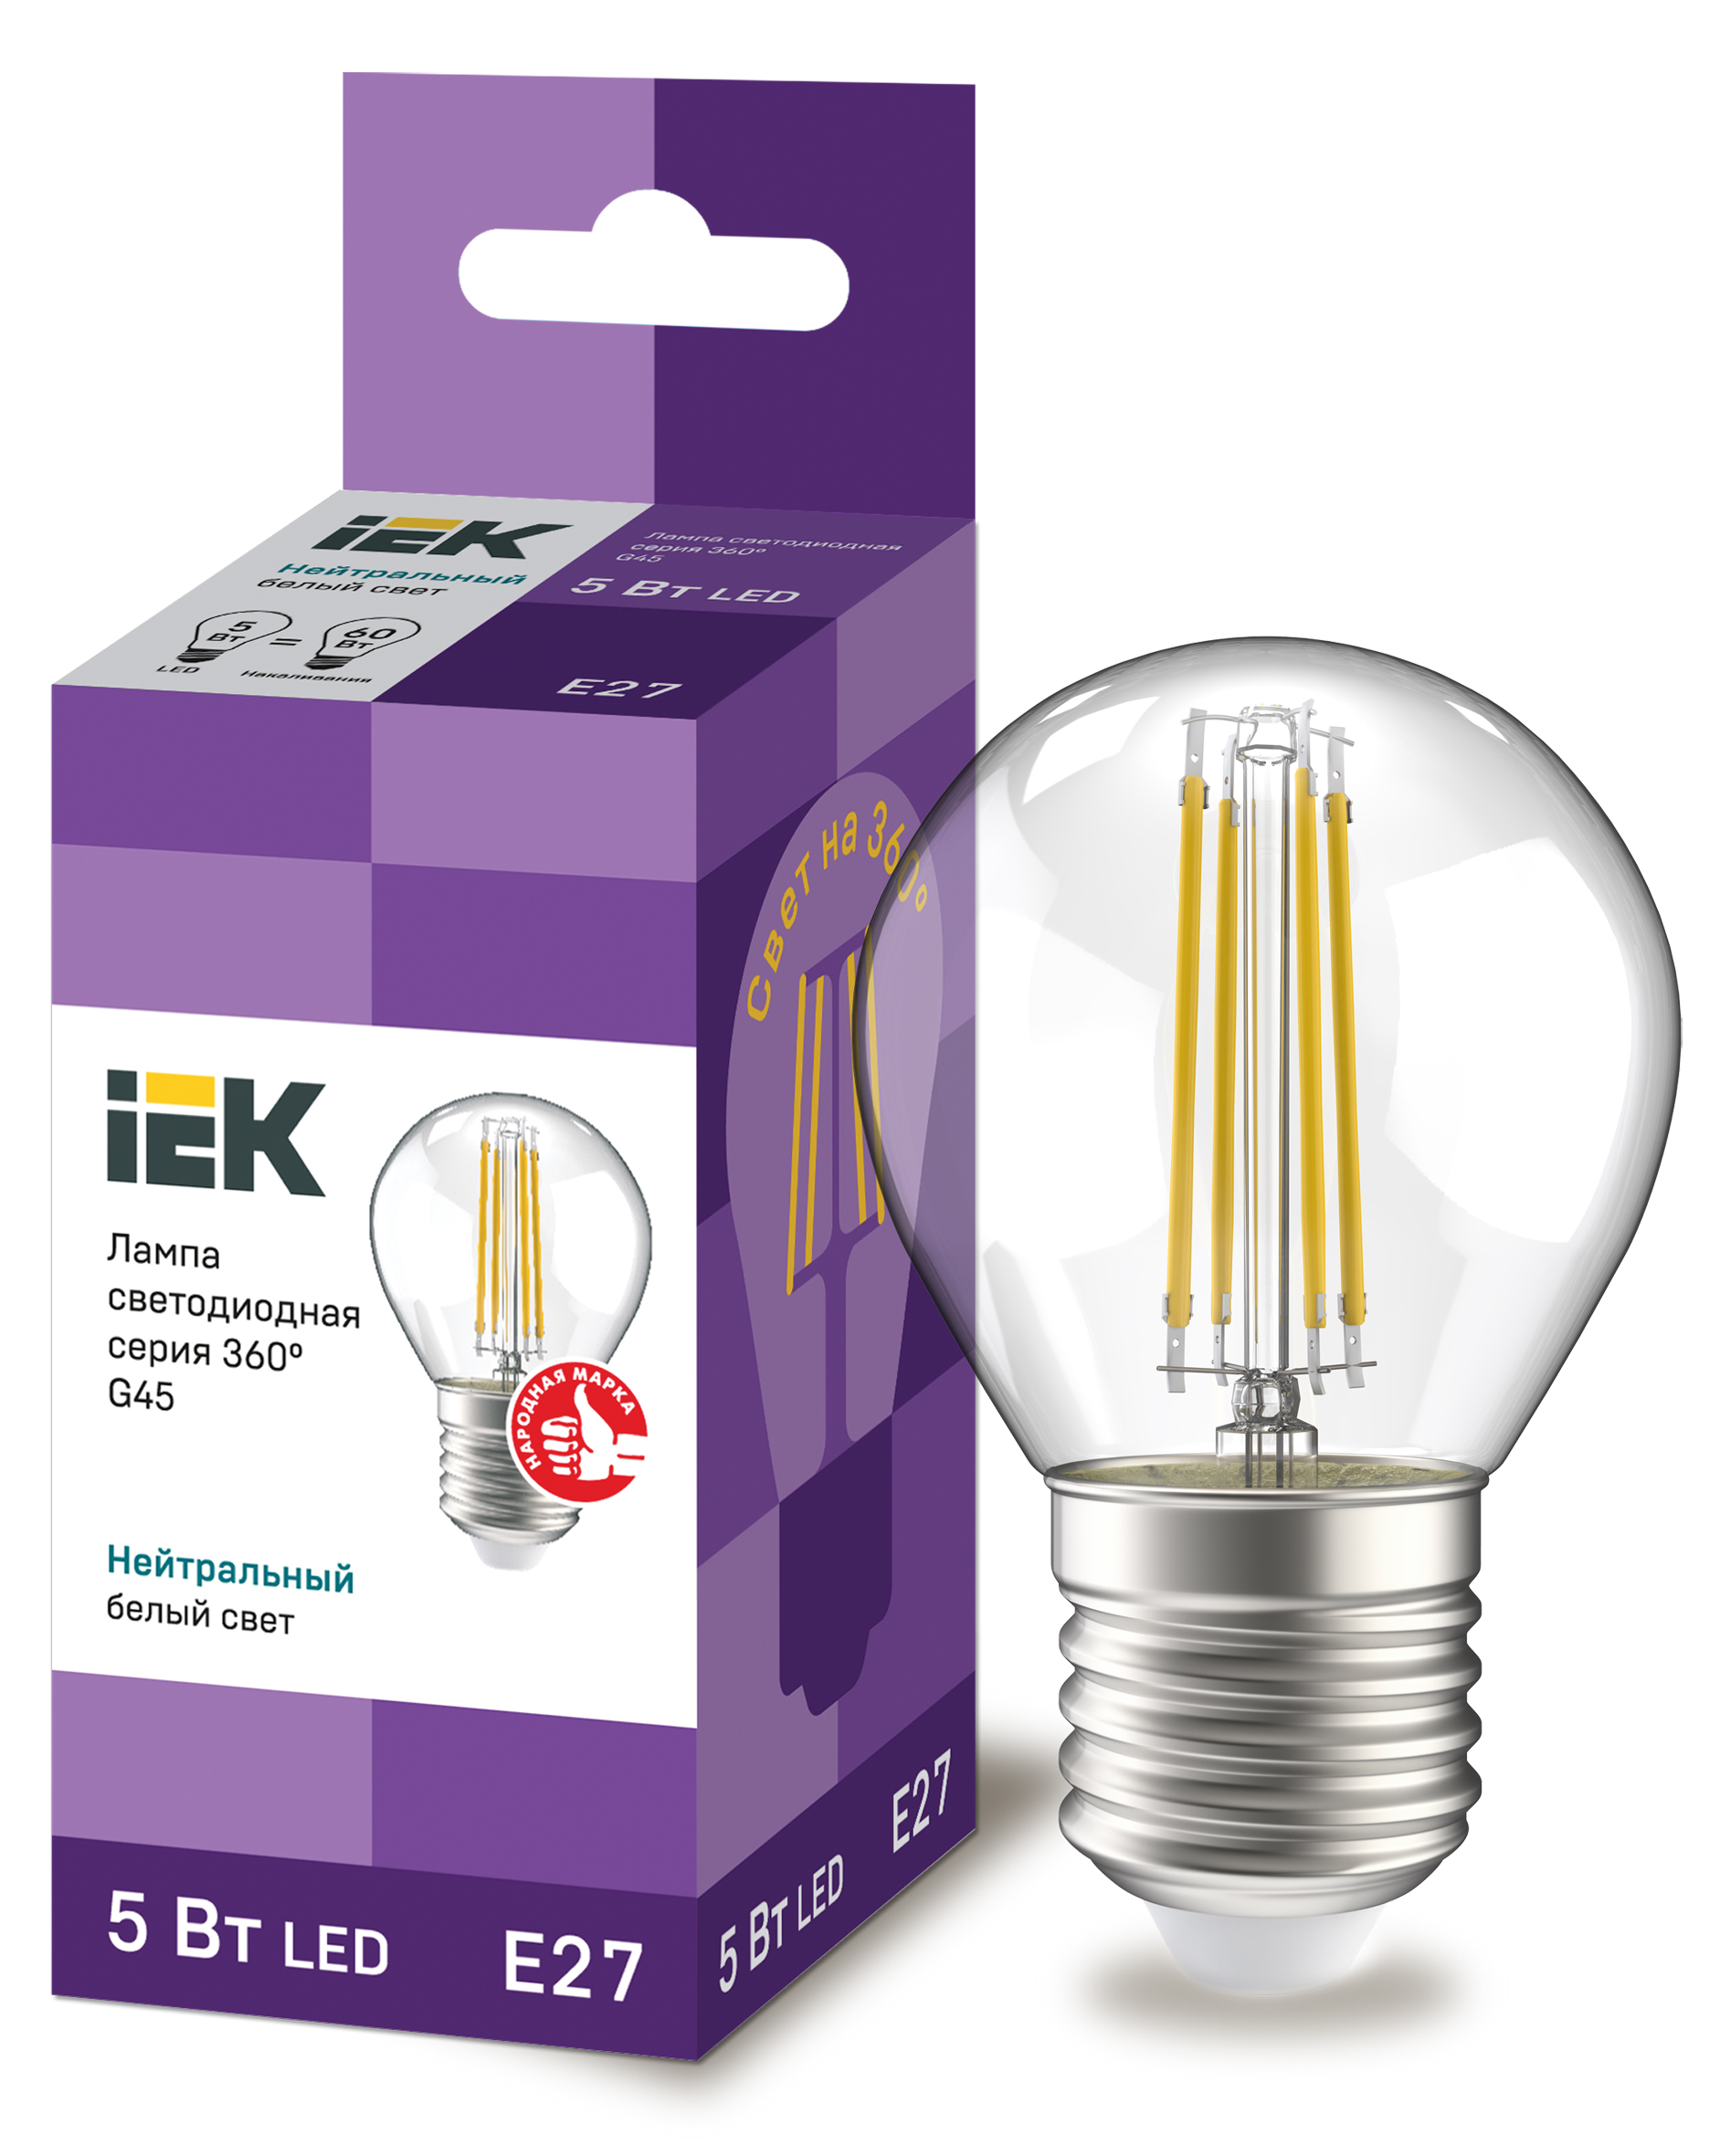 IEK Лампа LED G45 шар прозрачный 5Вт 230В 4000К E27 серия 360°